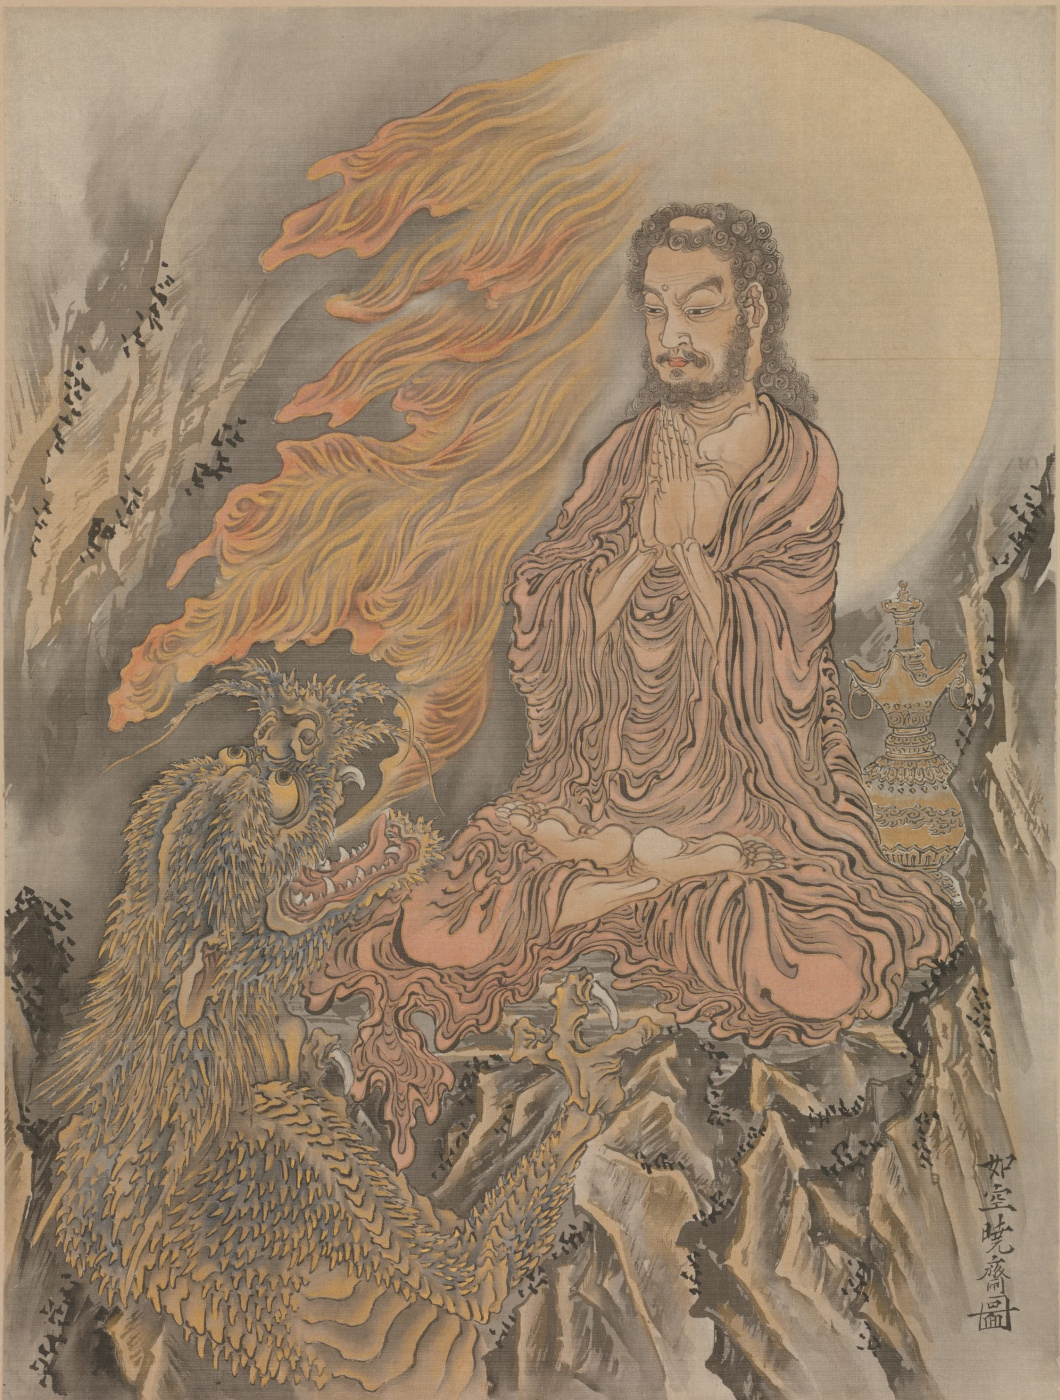 Kawanabe Kyosai. Shakyamuni (Buddha) defeating the demon king Mara